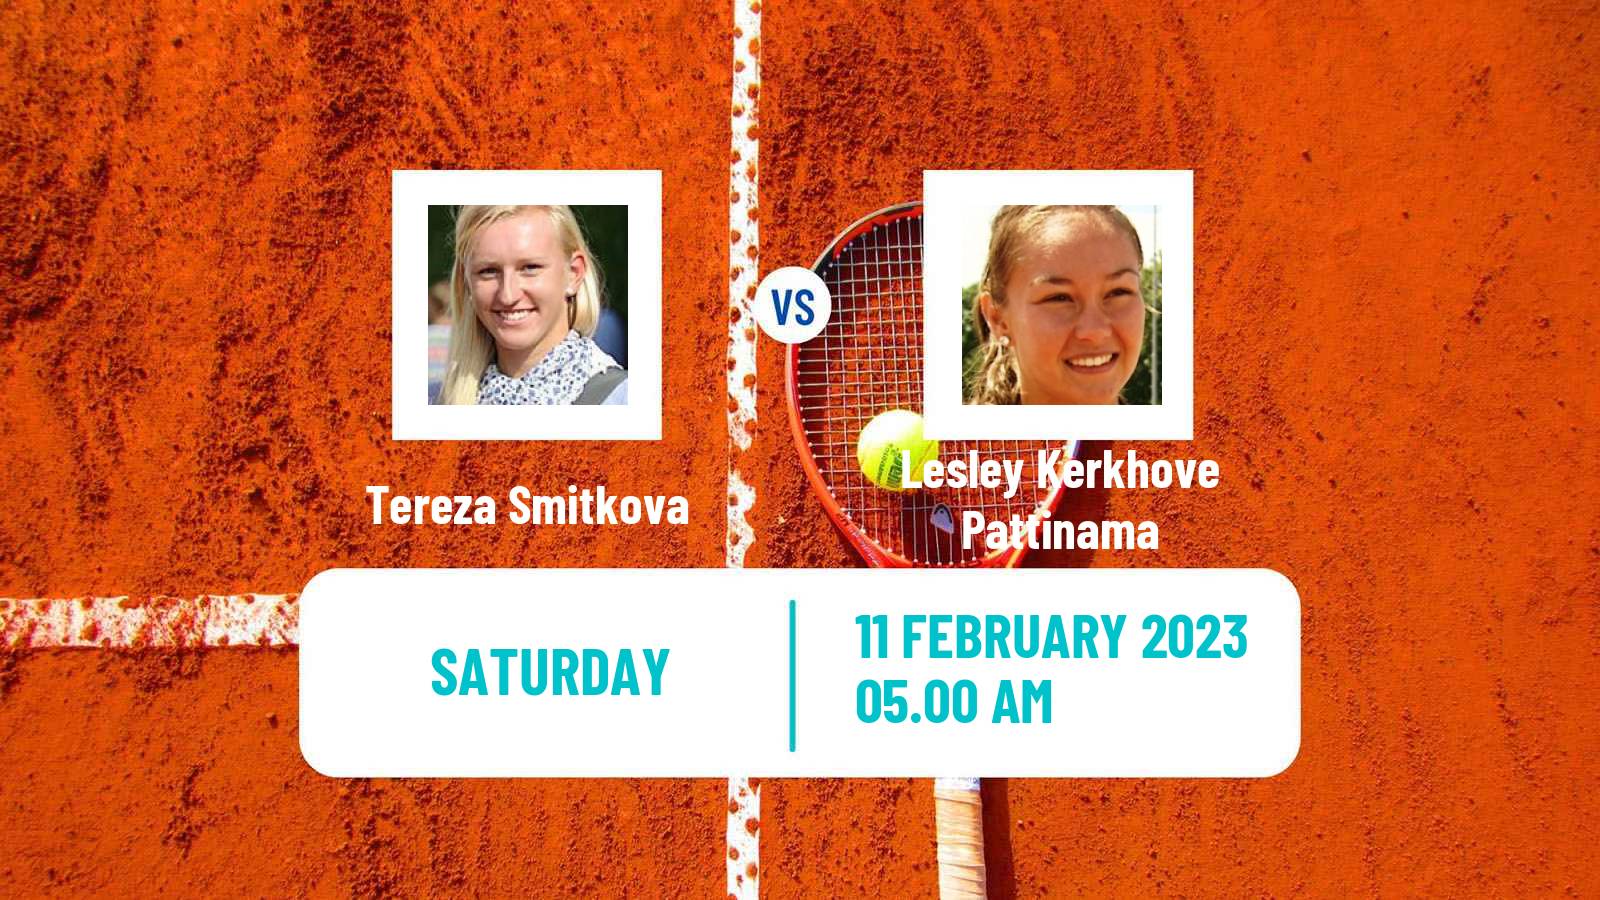 Tennis ITF Tournaments Tereza Smitkova - Lesley Kerkhove Pattinama